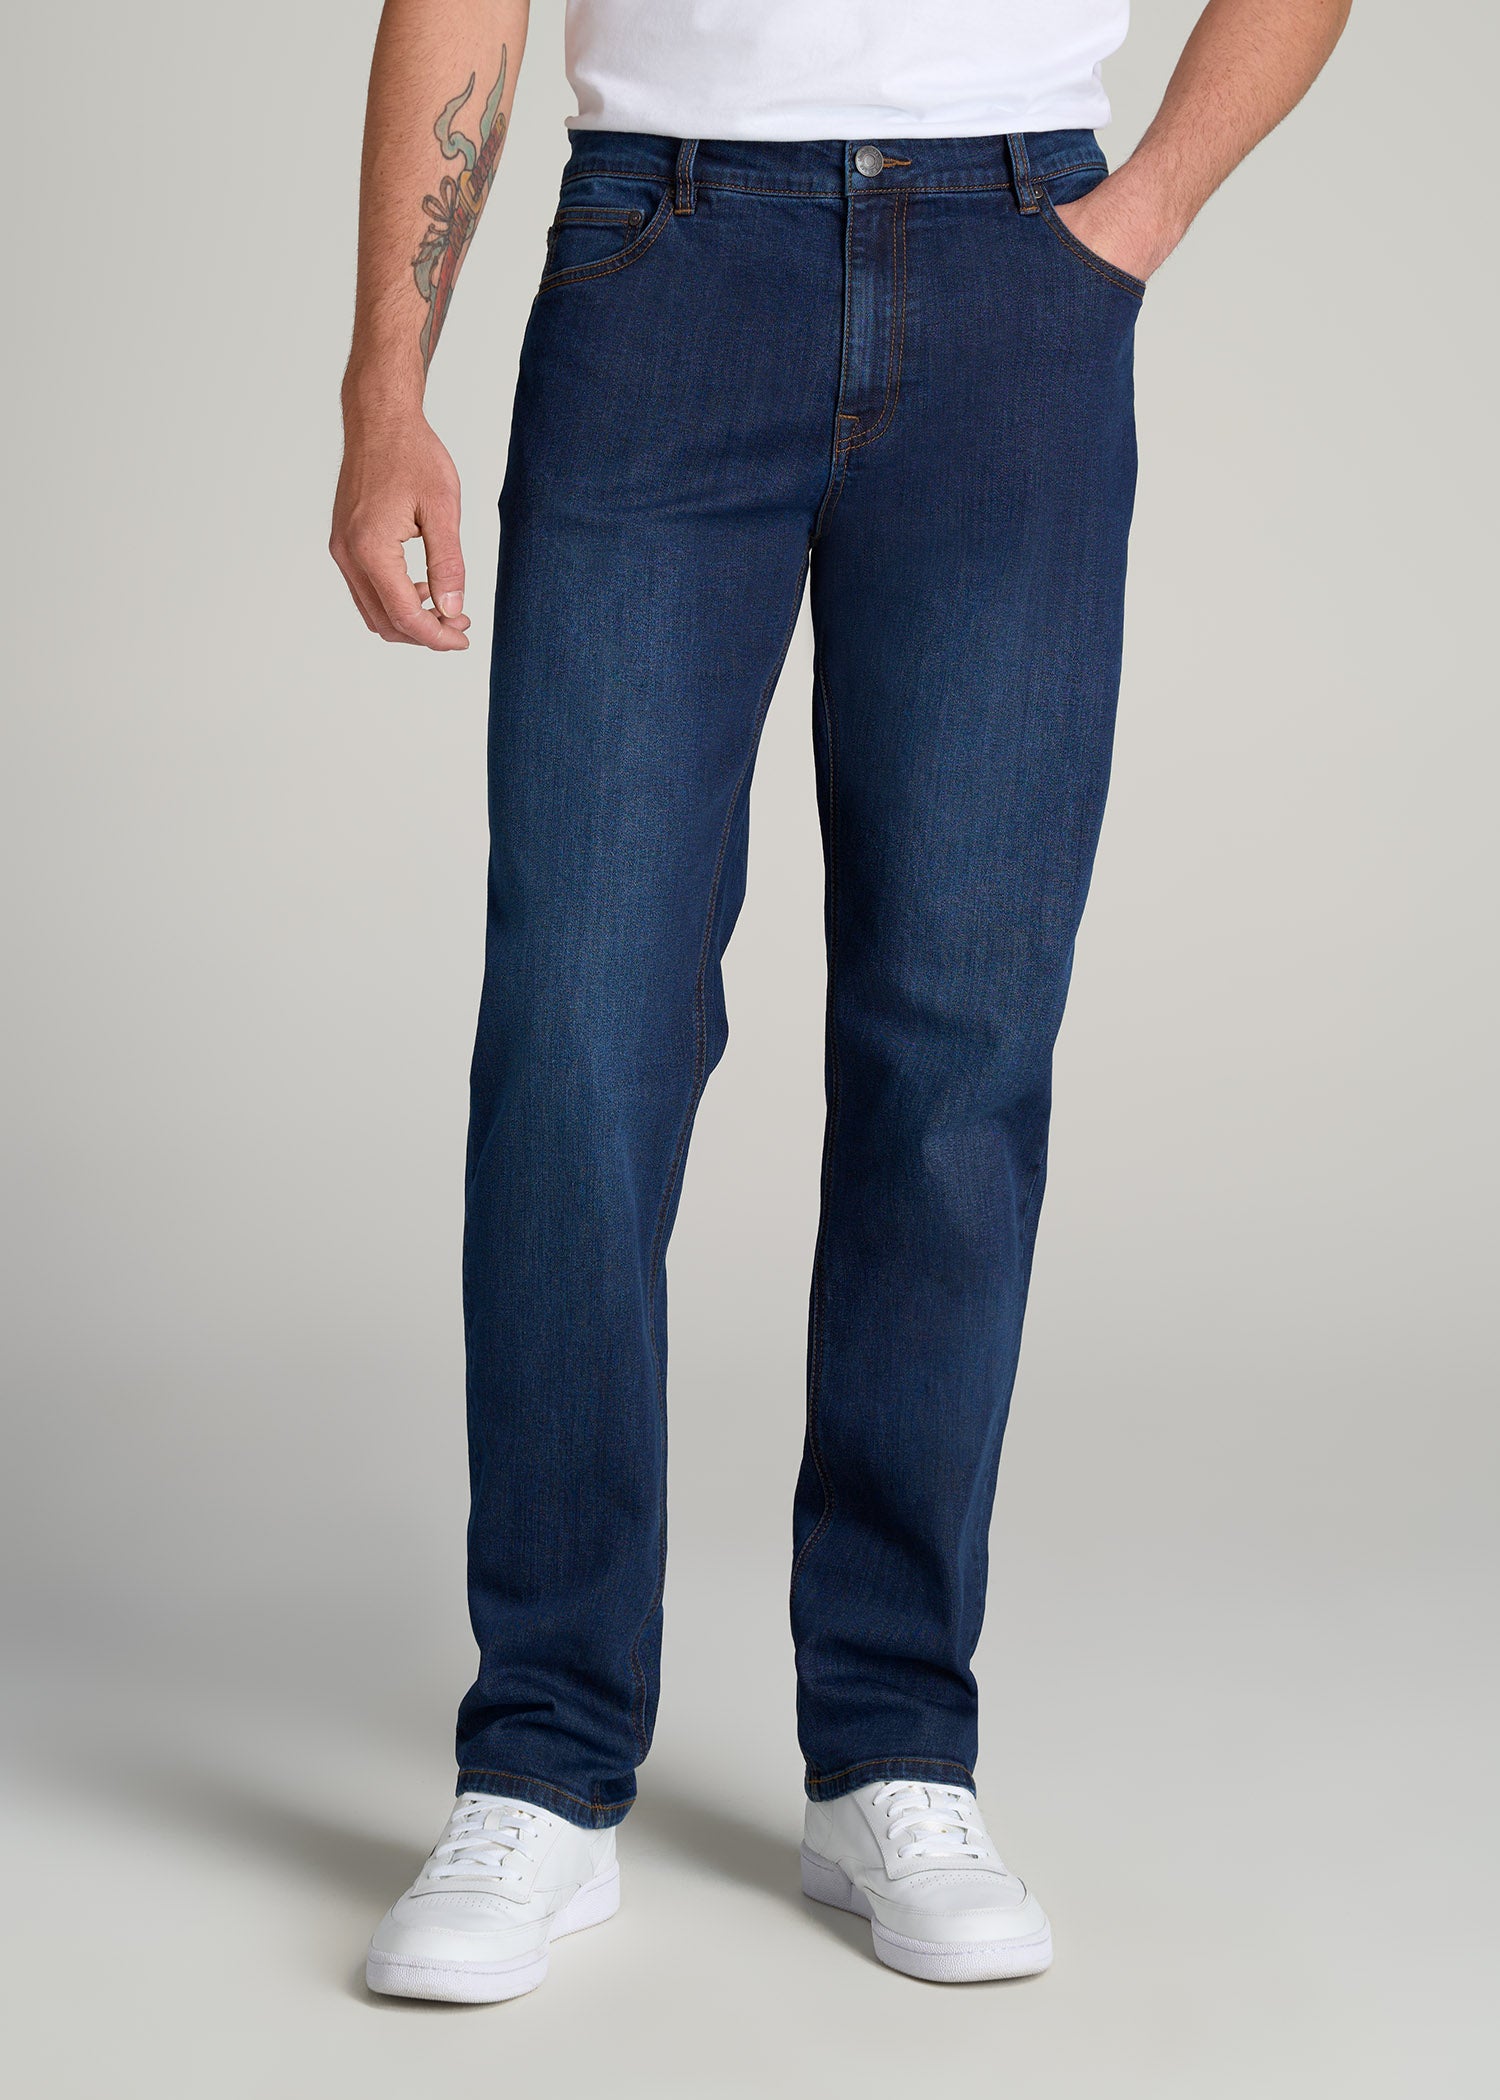 Men's Loose Straight Breeches Sports Half Pants Short Jeans Casual Denim  Shorts